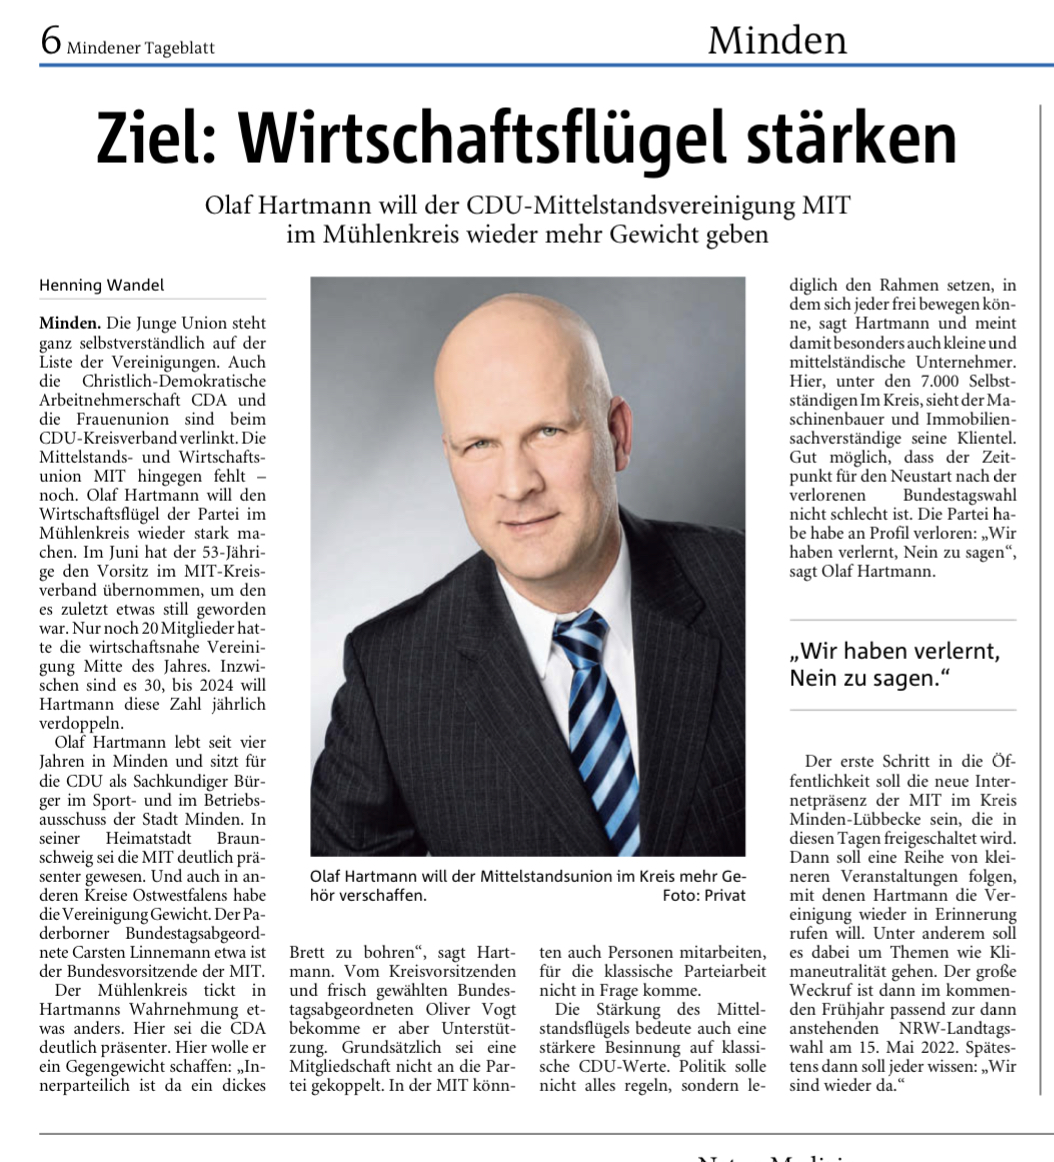 Mindener Tageblatt 18.10.2021 / Henning Wandel